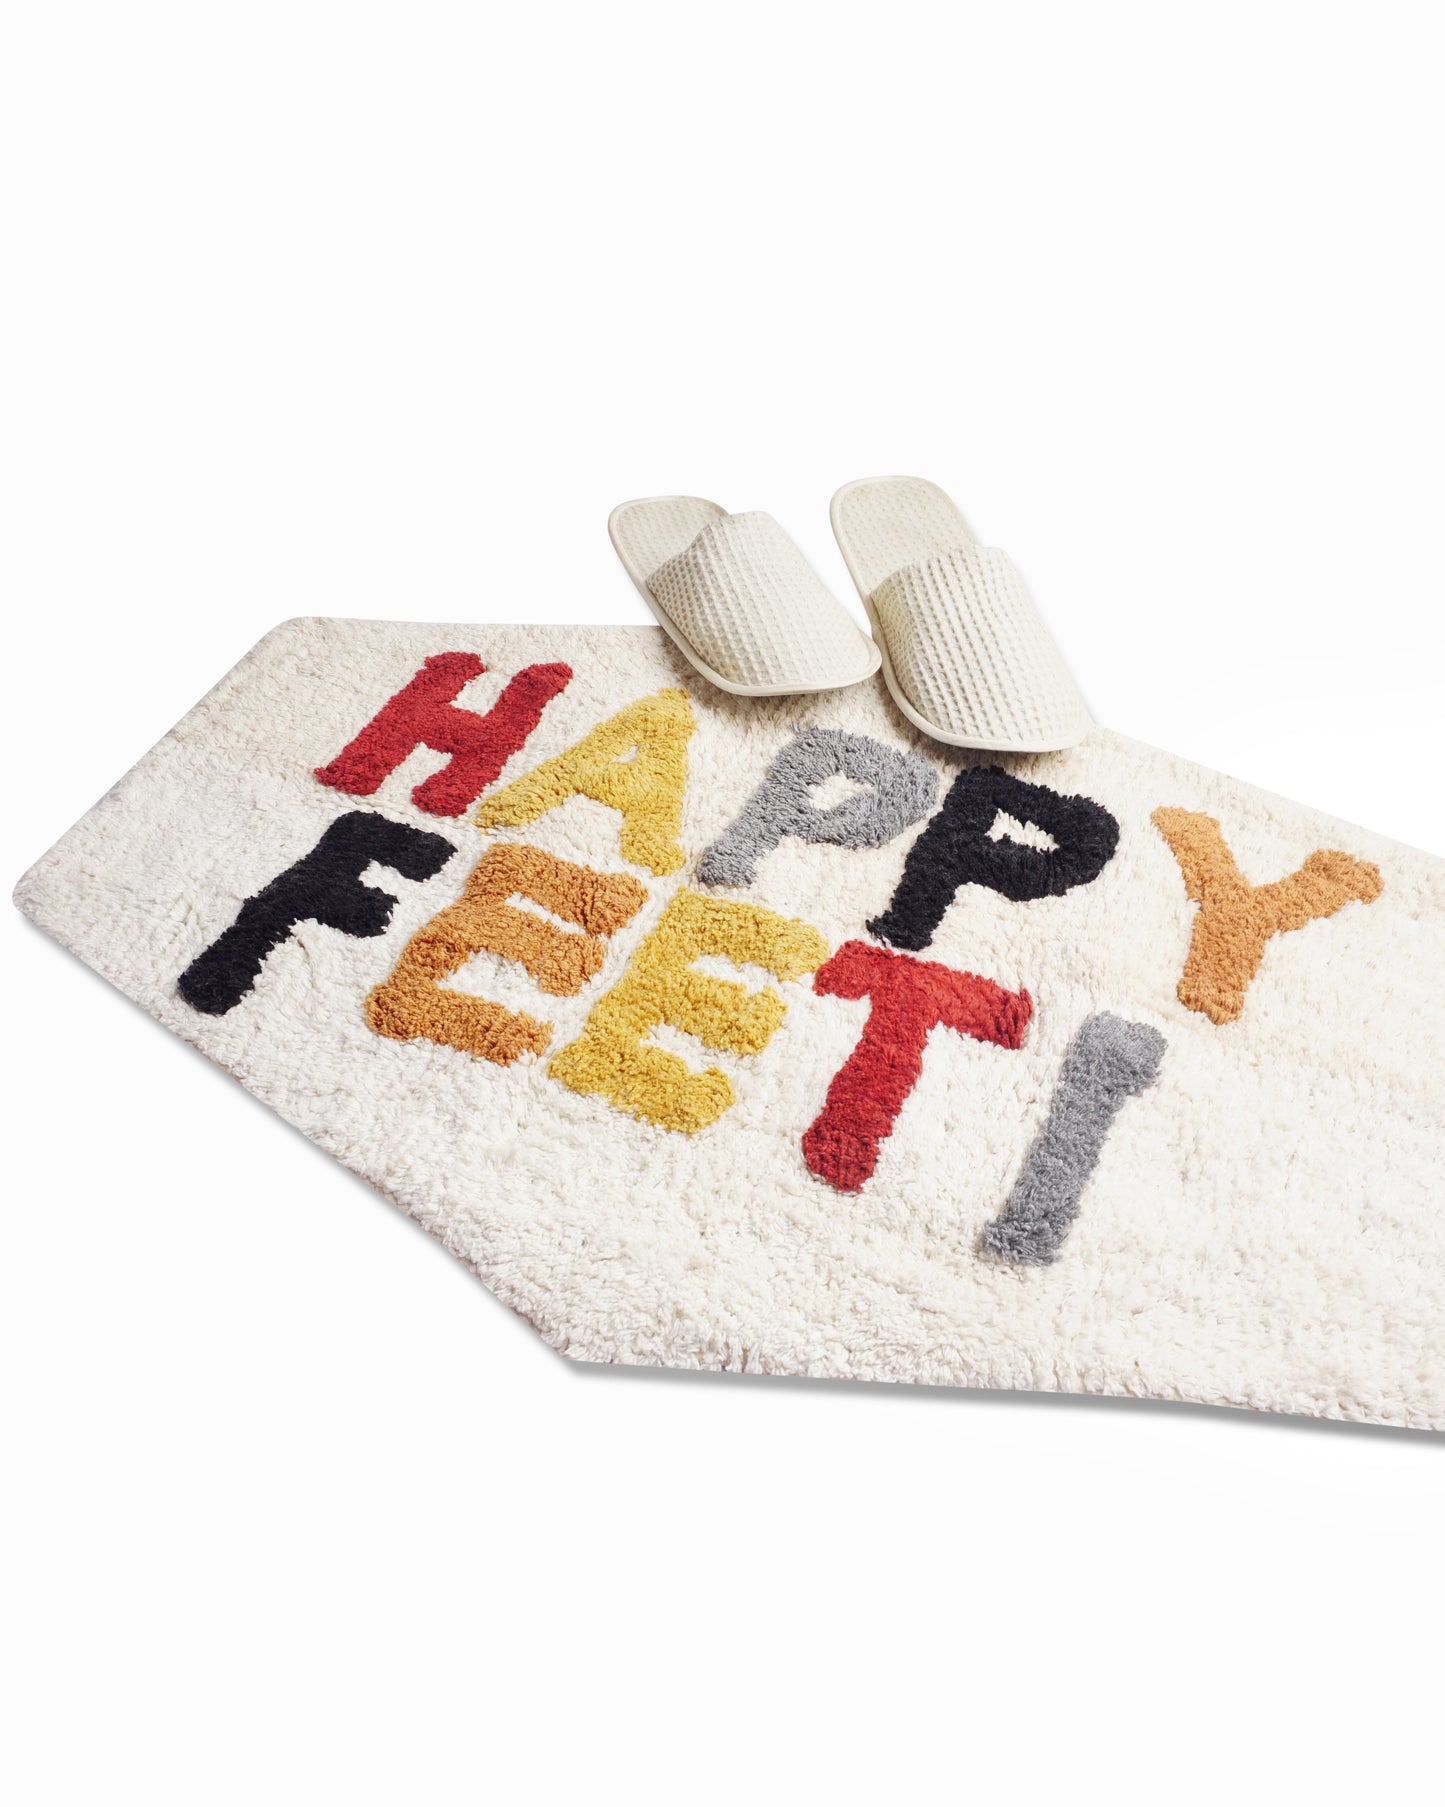 Quirky slogan bath/door mat : Happy feet